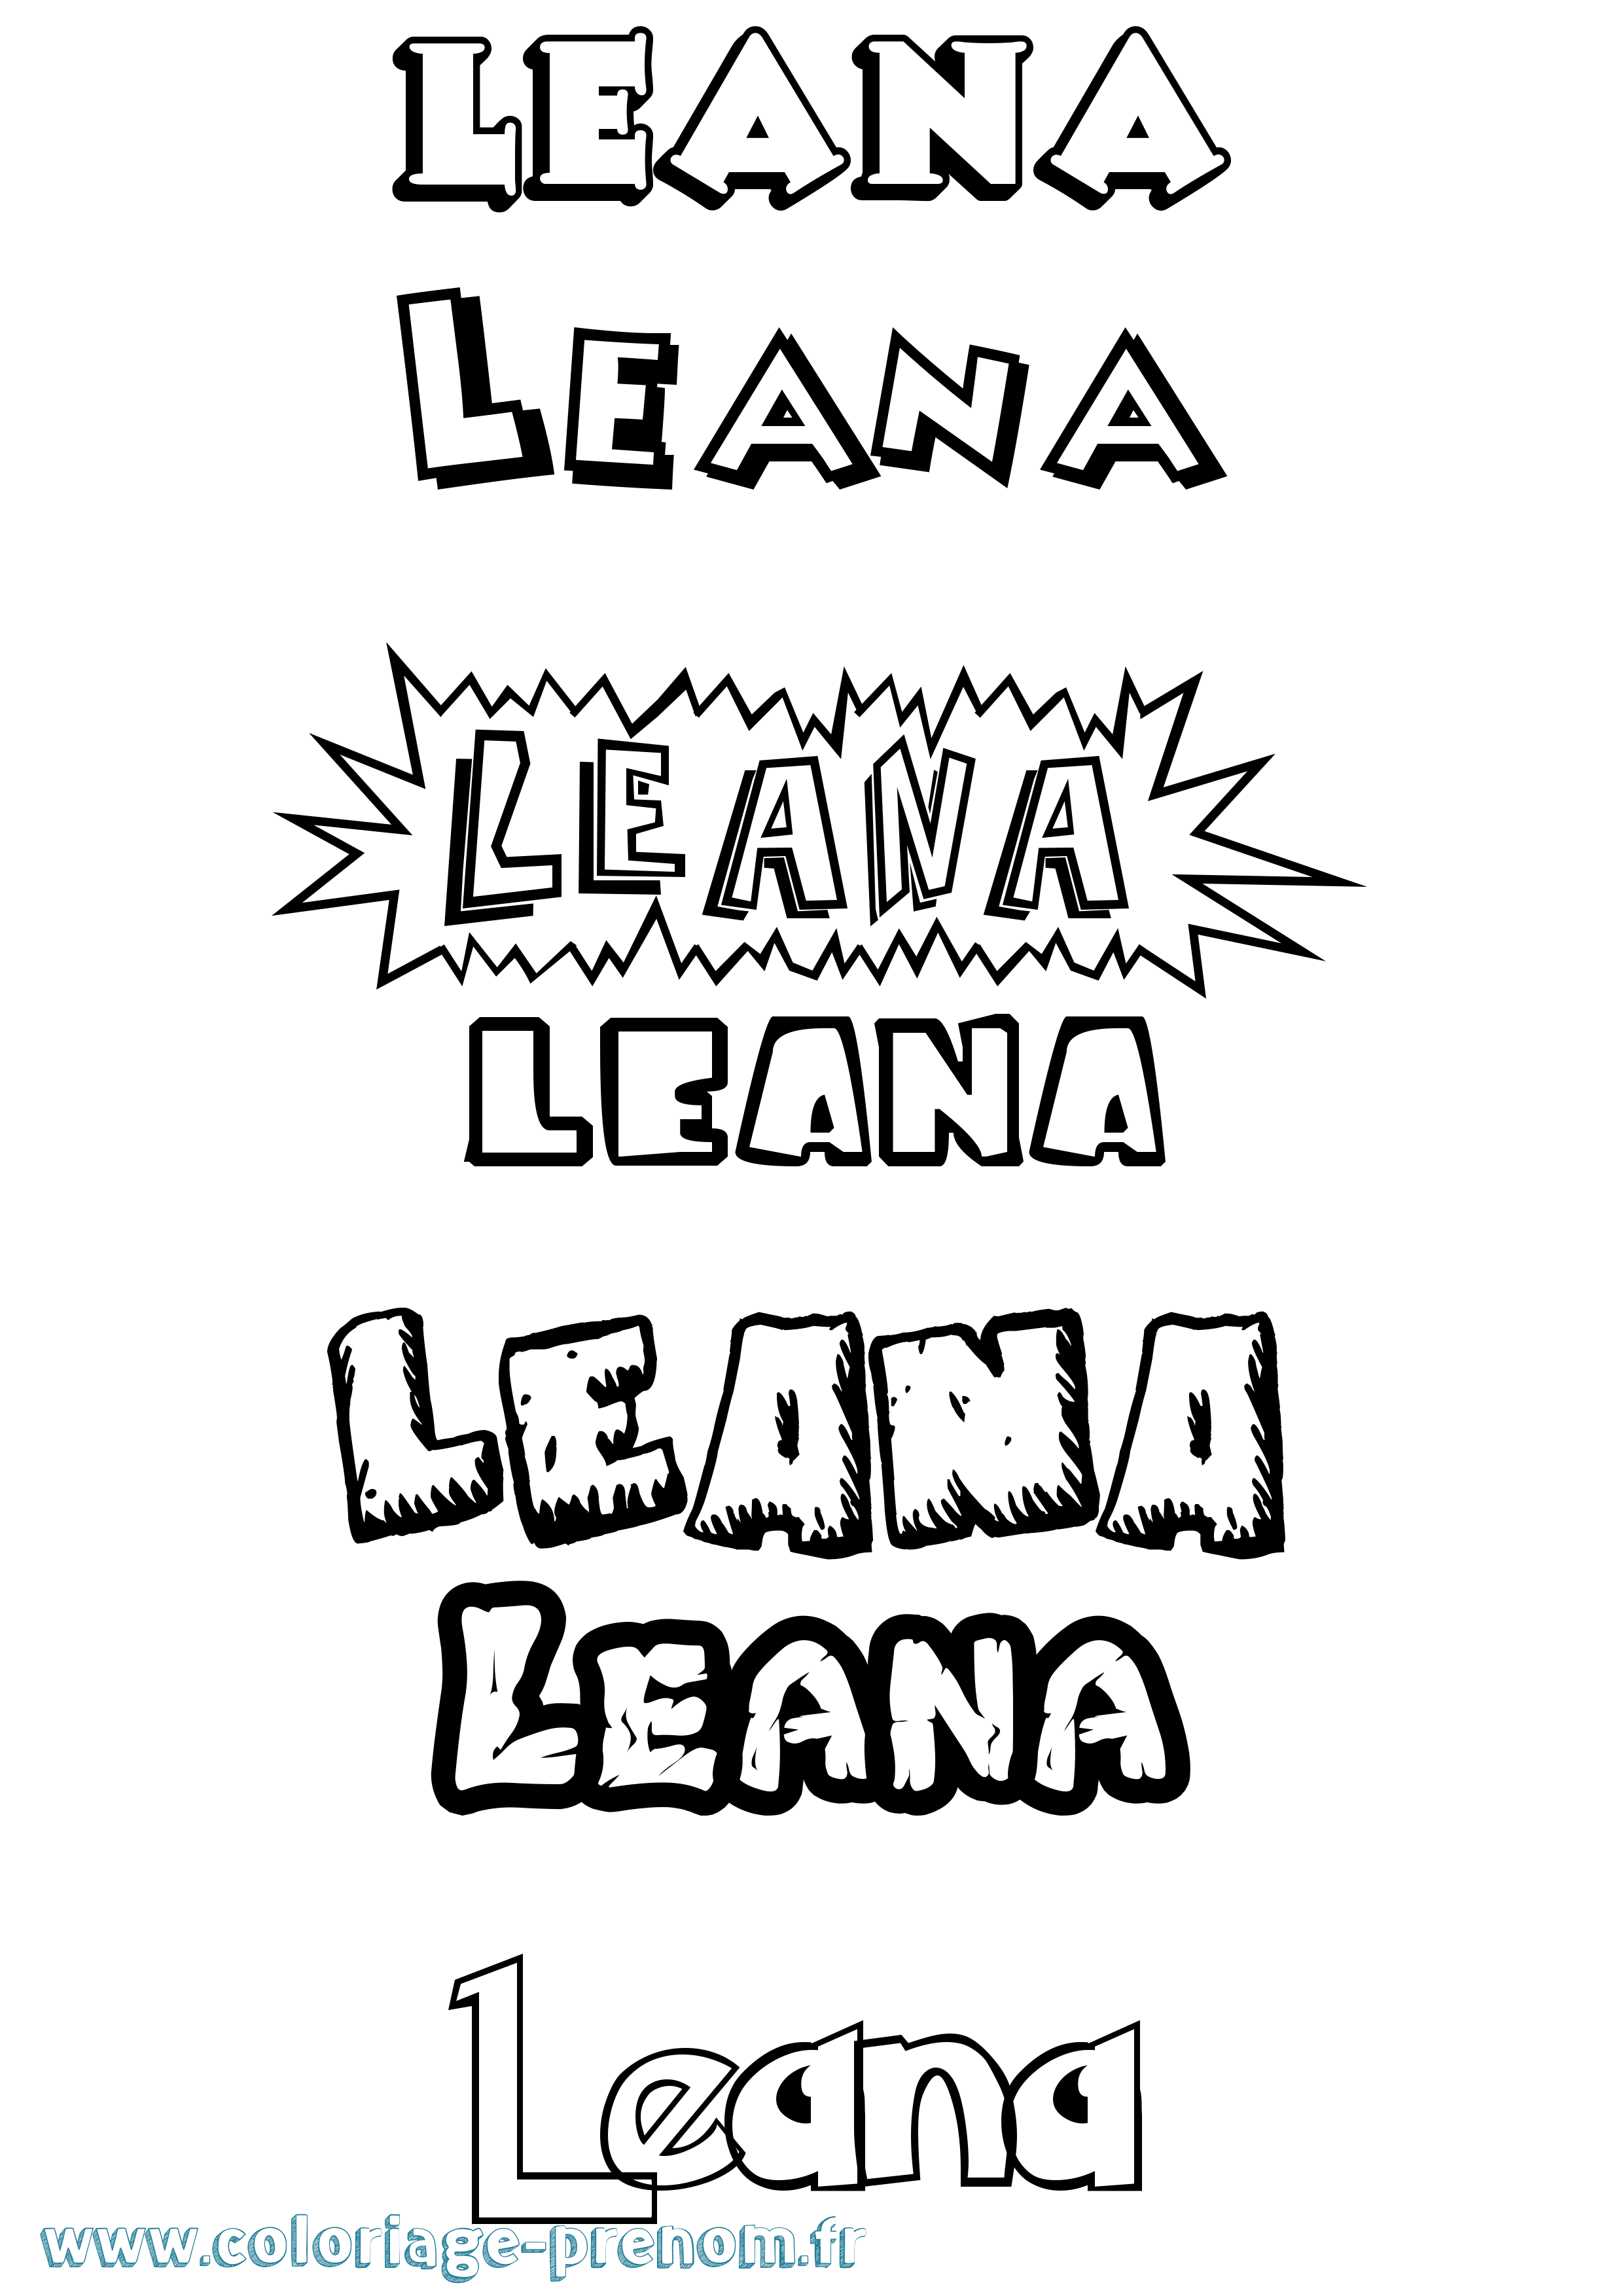 Coloriage prénom Leana